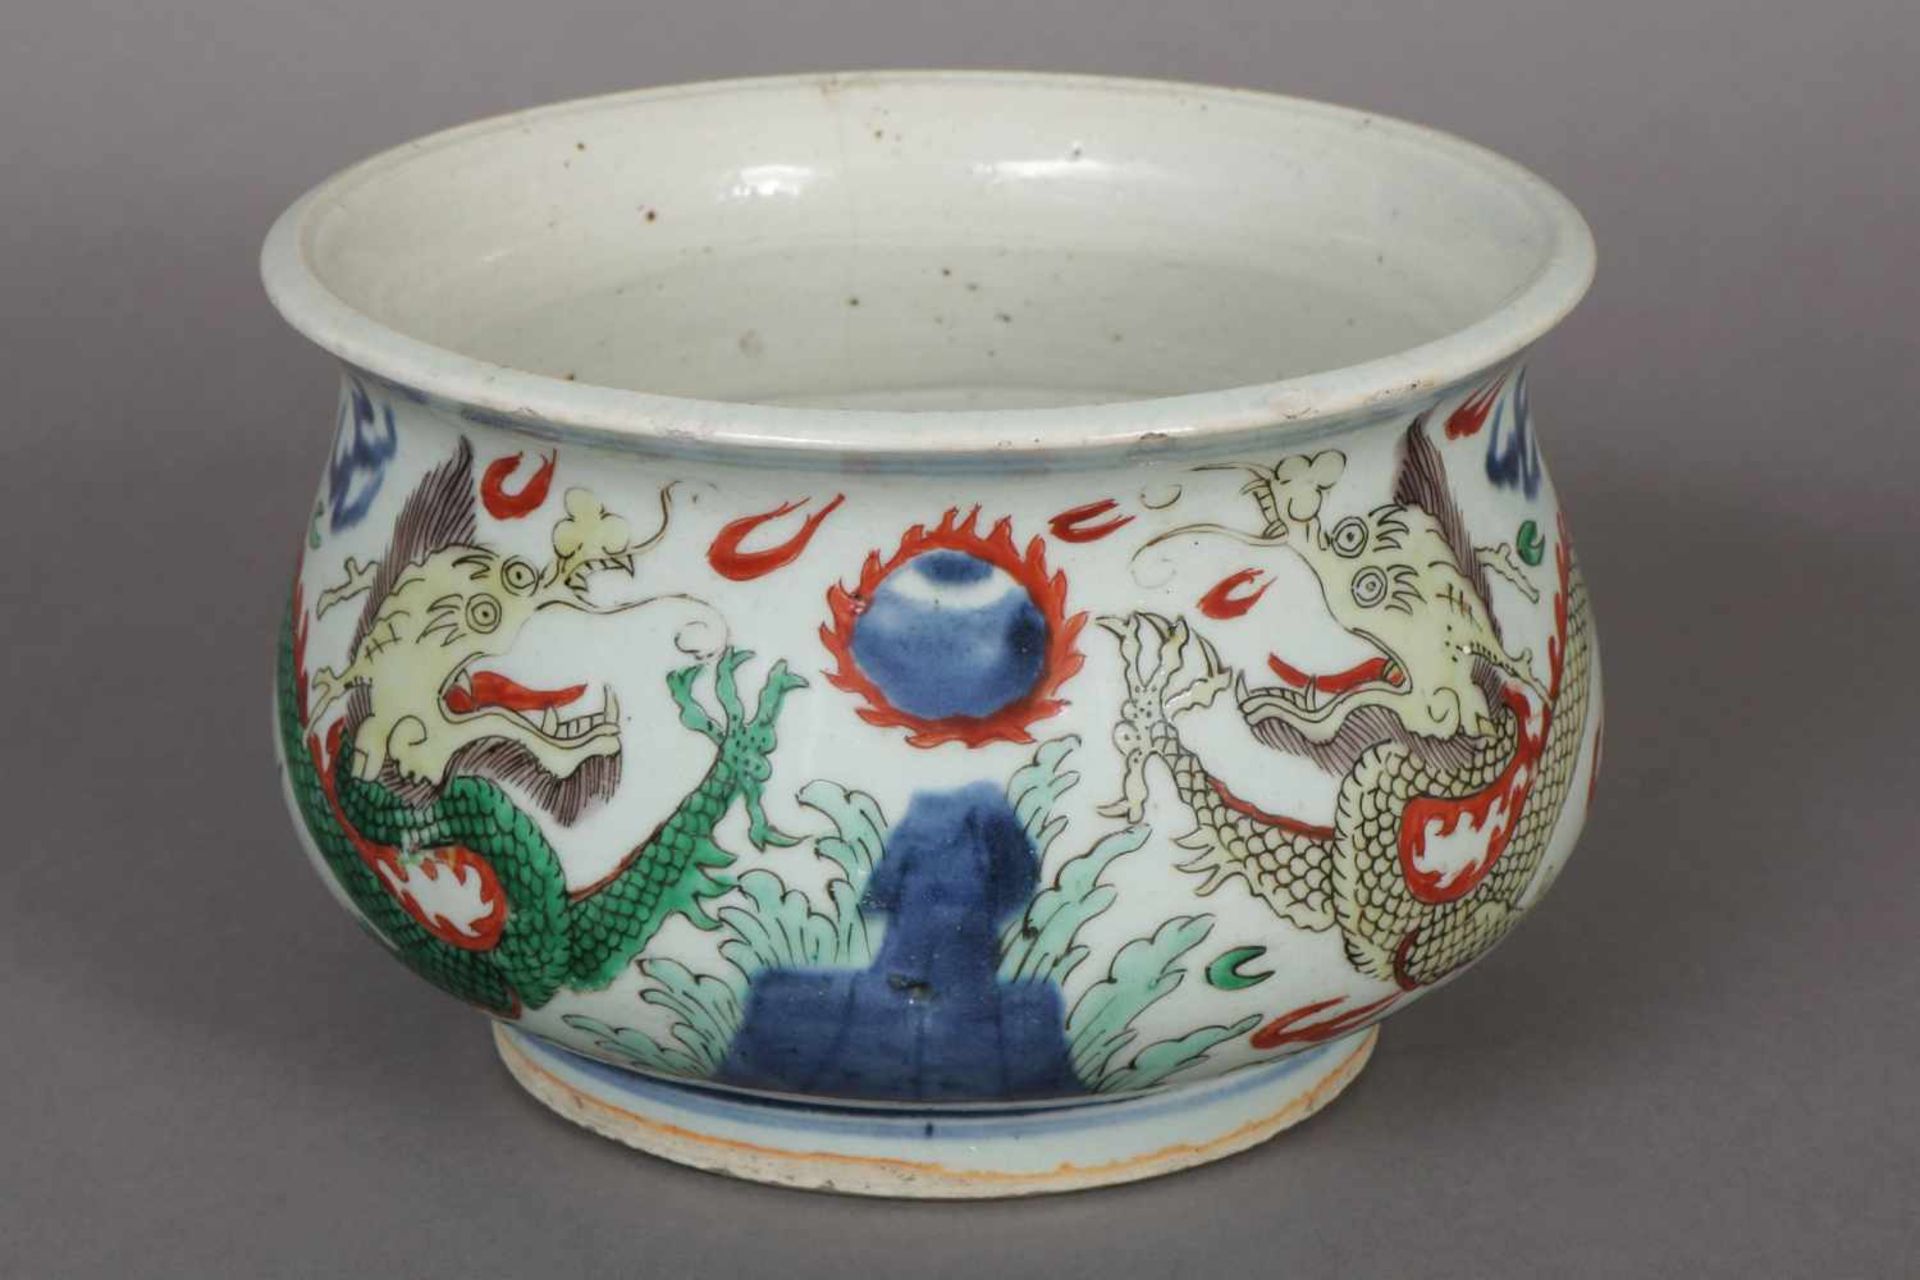 Chinesisches Porzellangefäß wohl Kangxi (1661-1722), Qing-Dynastie, bauchiges Gefäß, Wandung